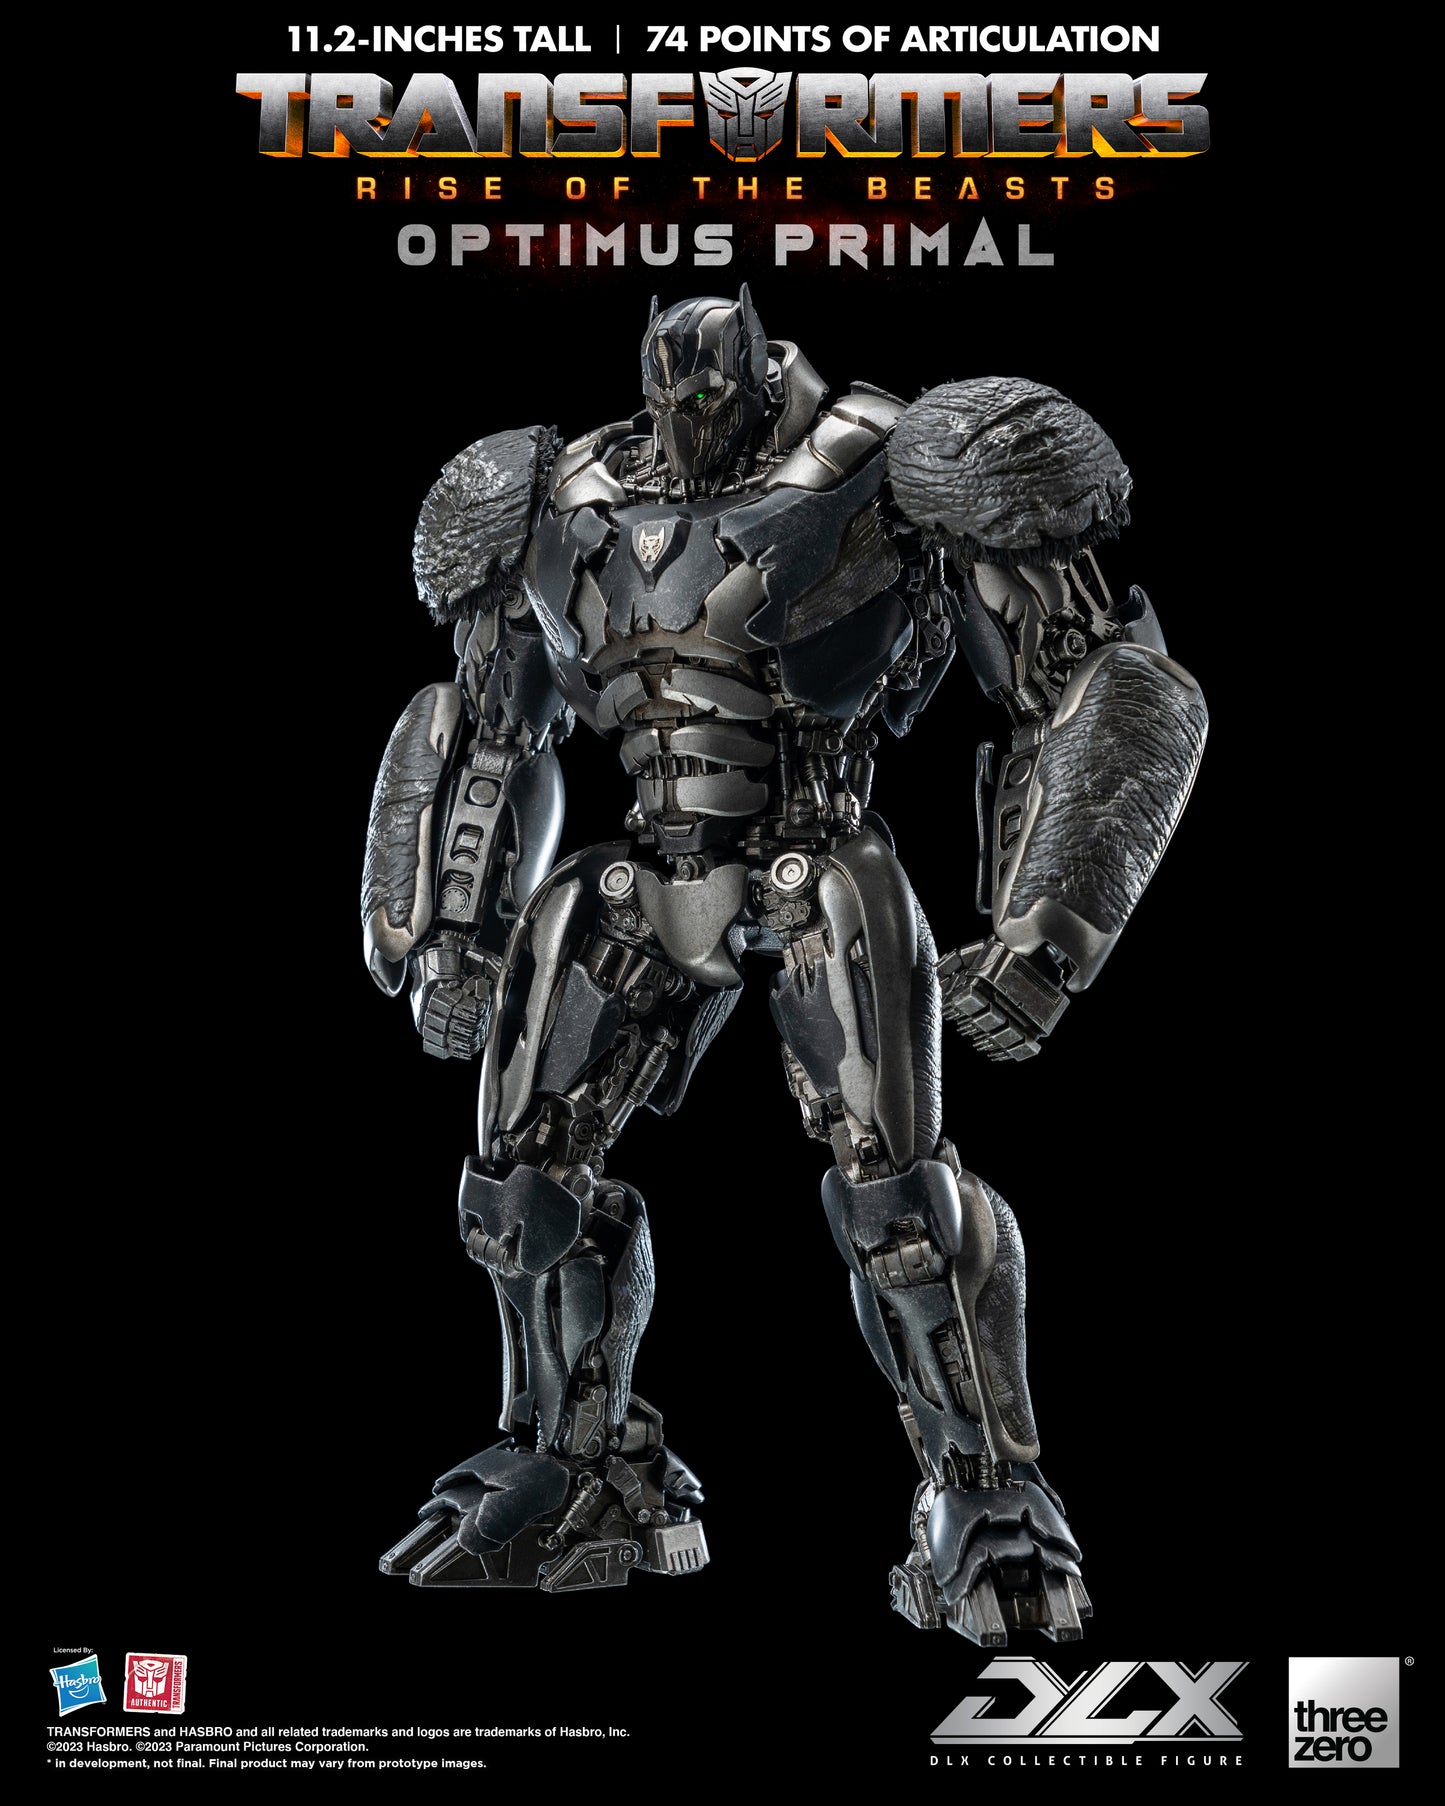 Optimus Primal Transformers ROTB DLX Action Figure Pre-order